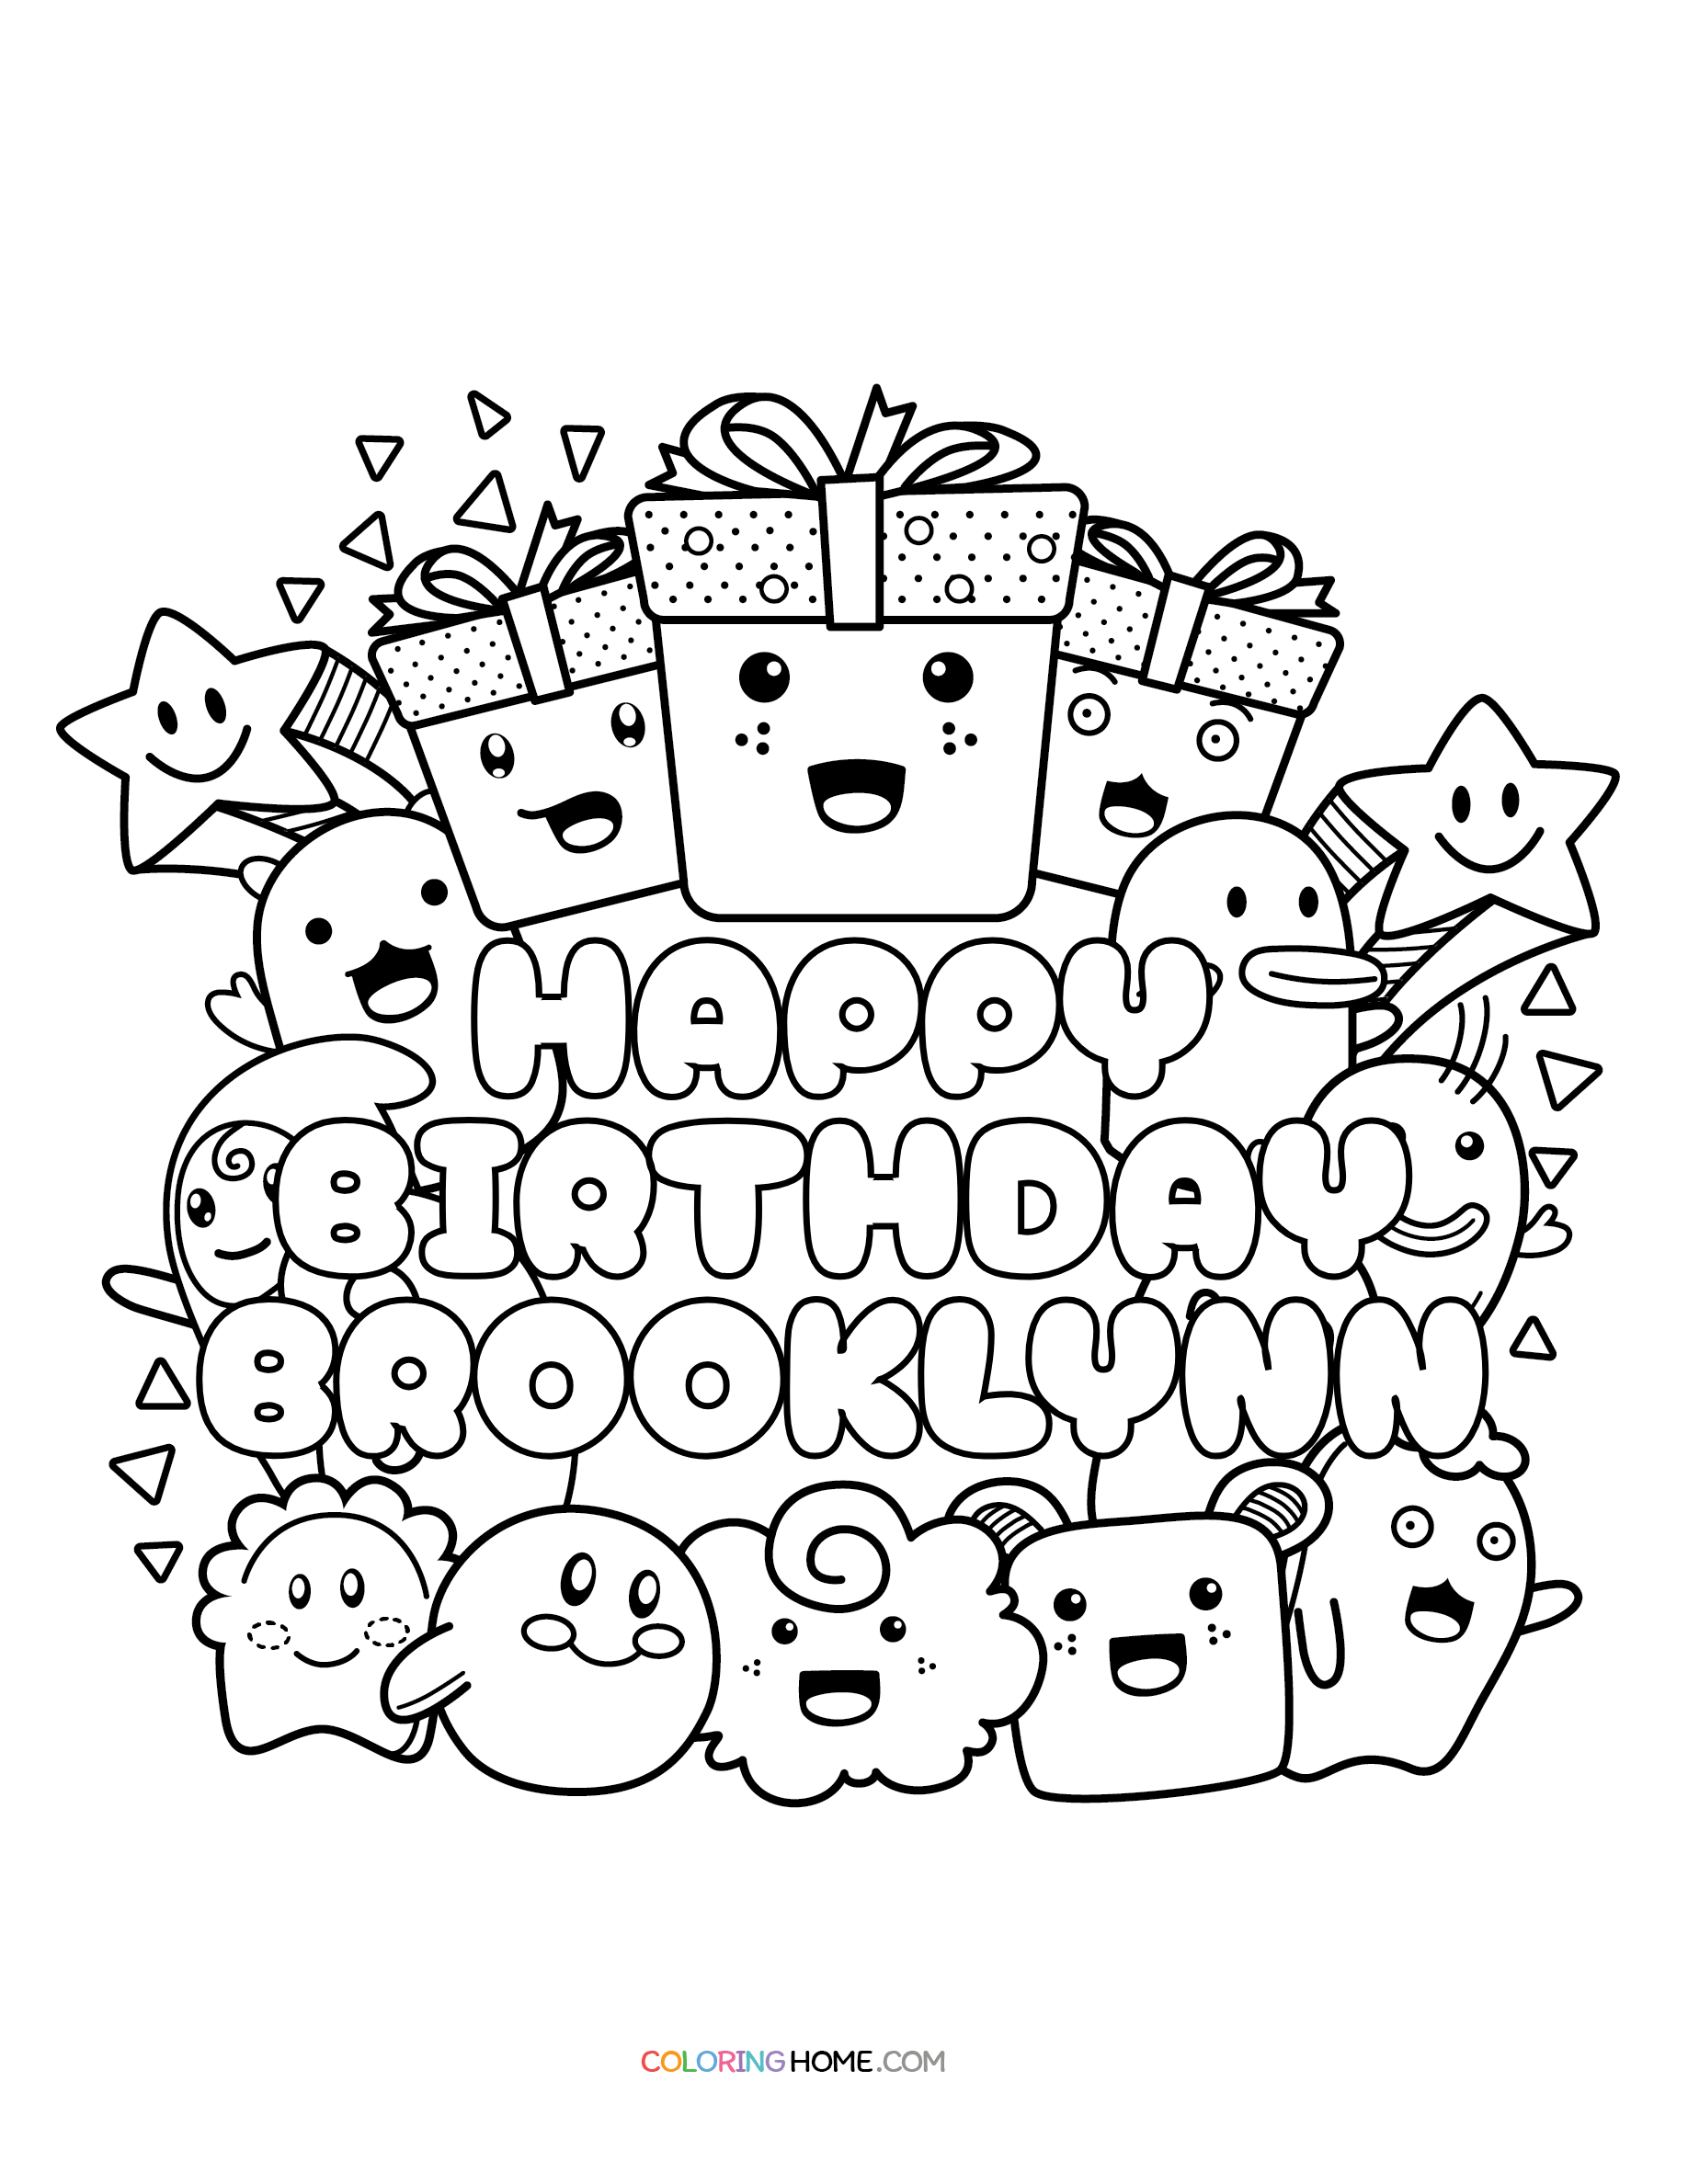 Happy Birthday Brooklynn coloring page